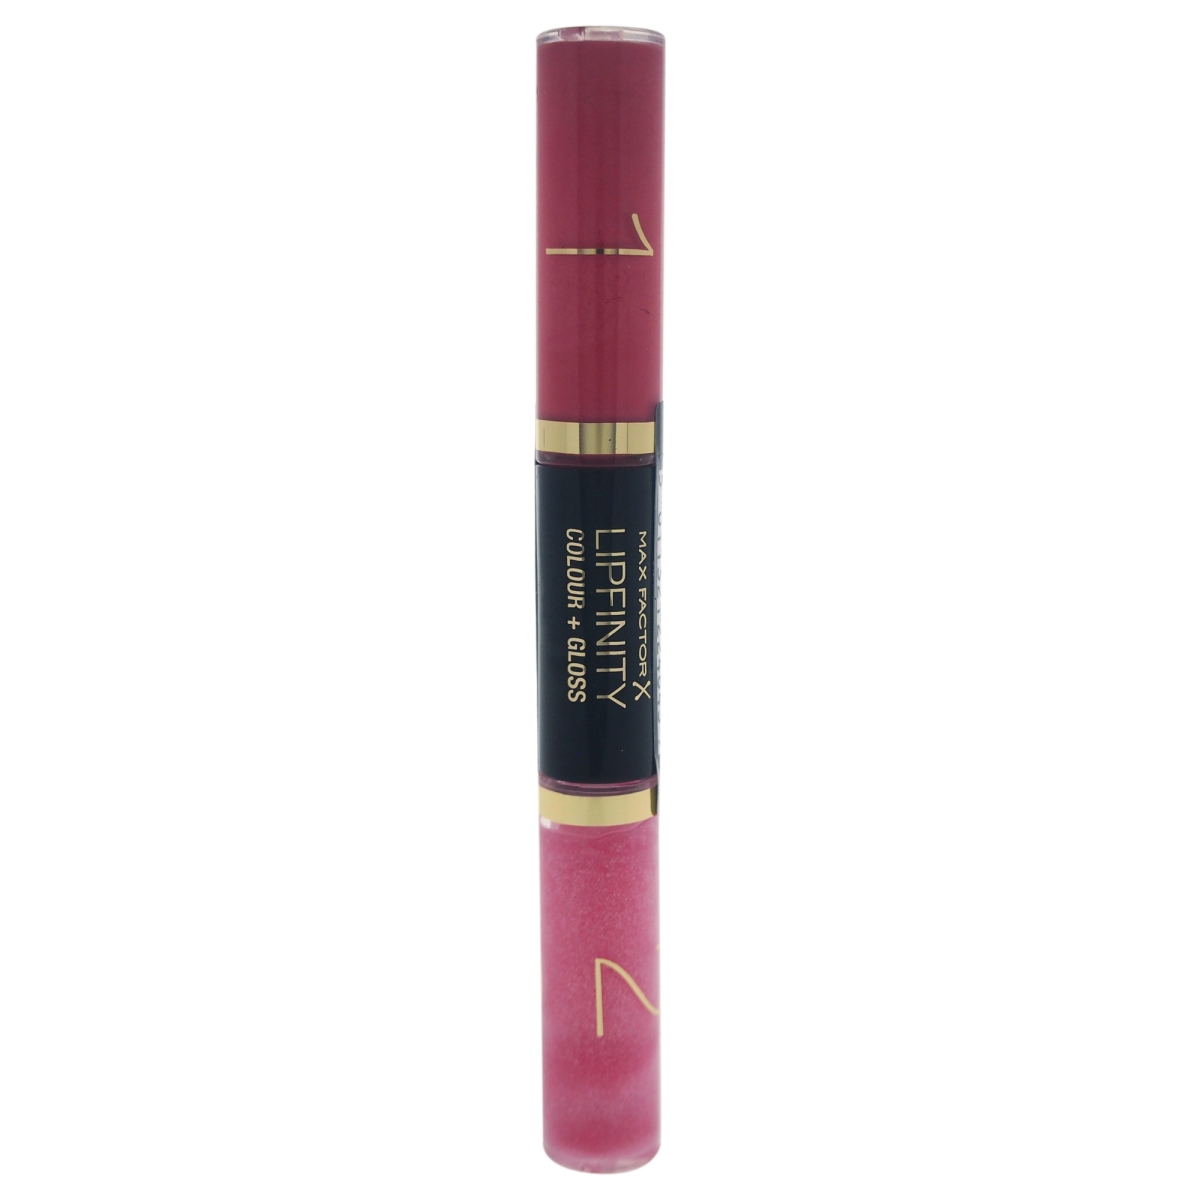 W-c-11243 2 X 3 Ml No. 510 Lipfinity Colour & Lip Gloss -radiant Rose For Women